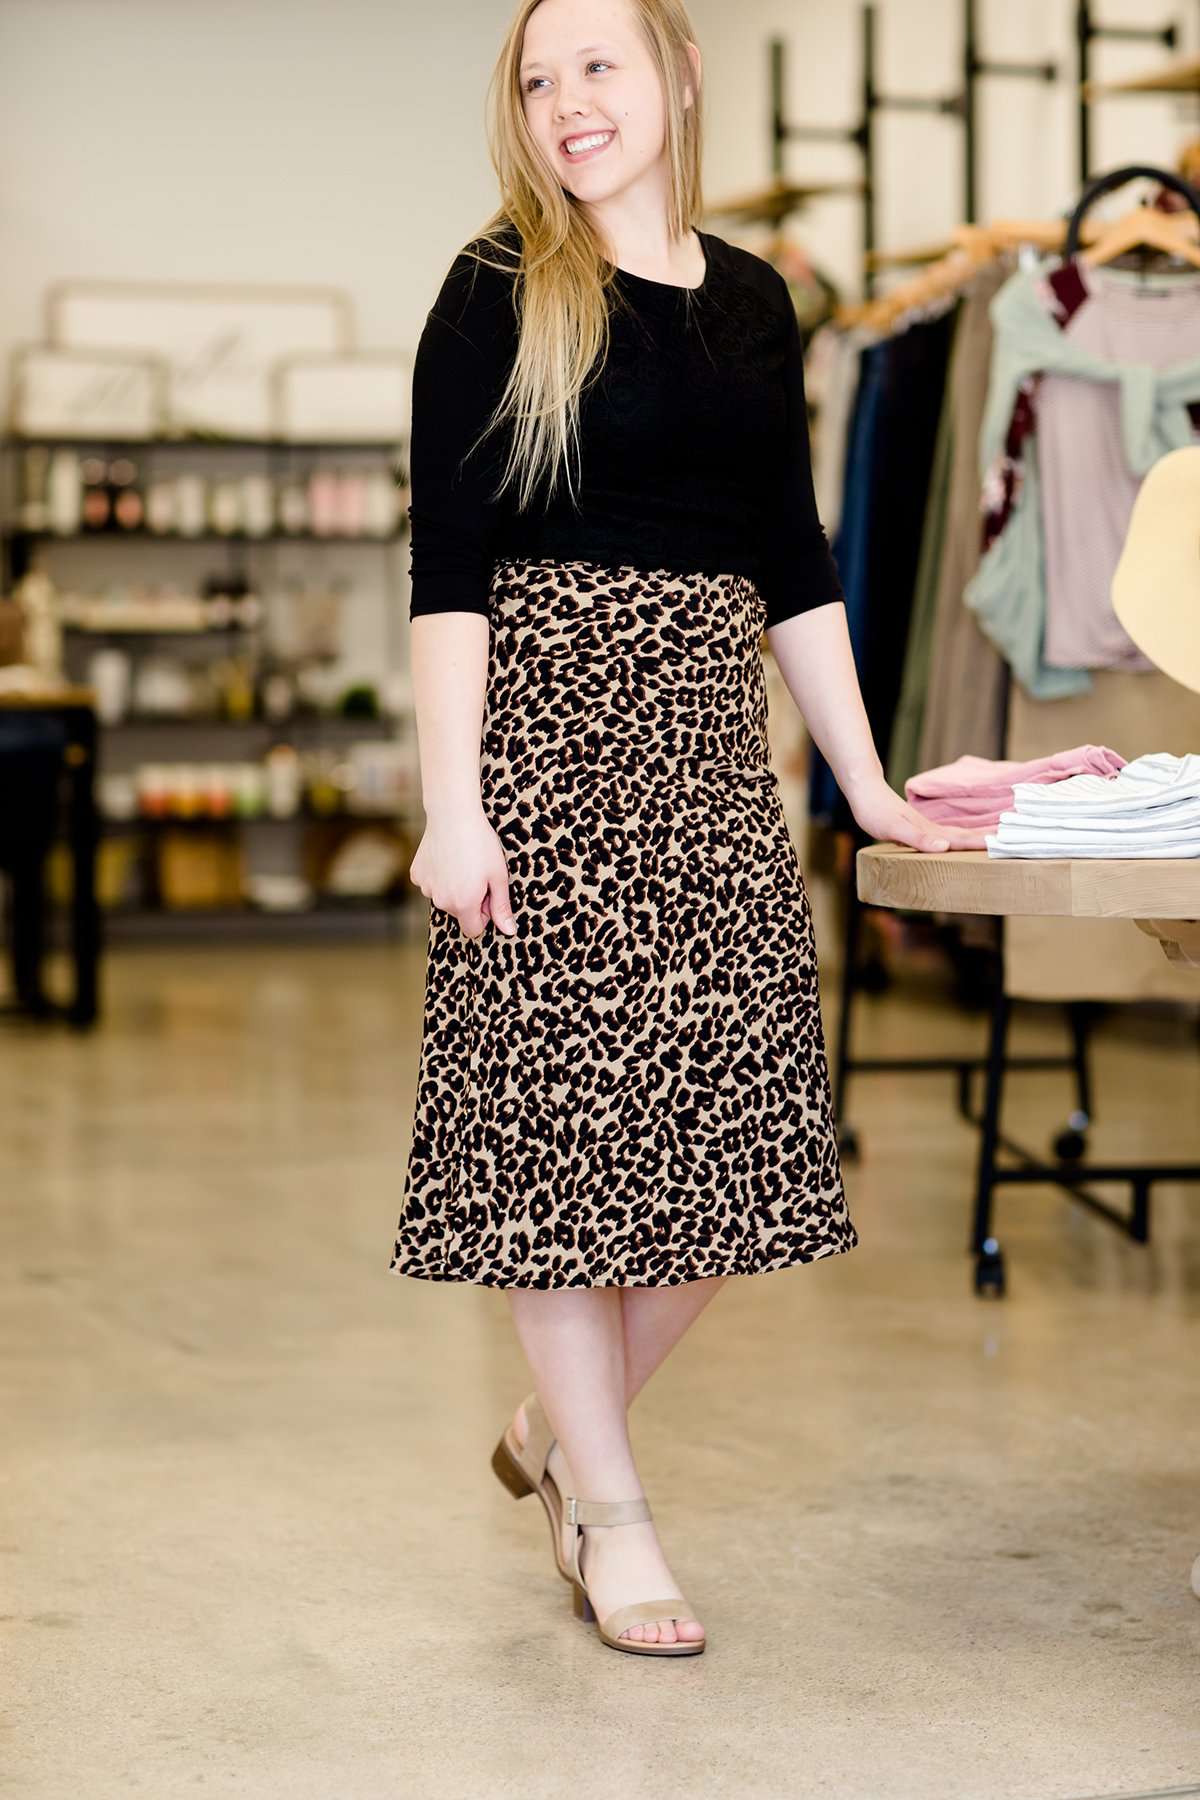 Leopard print midi length pencil skirt